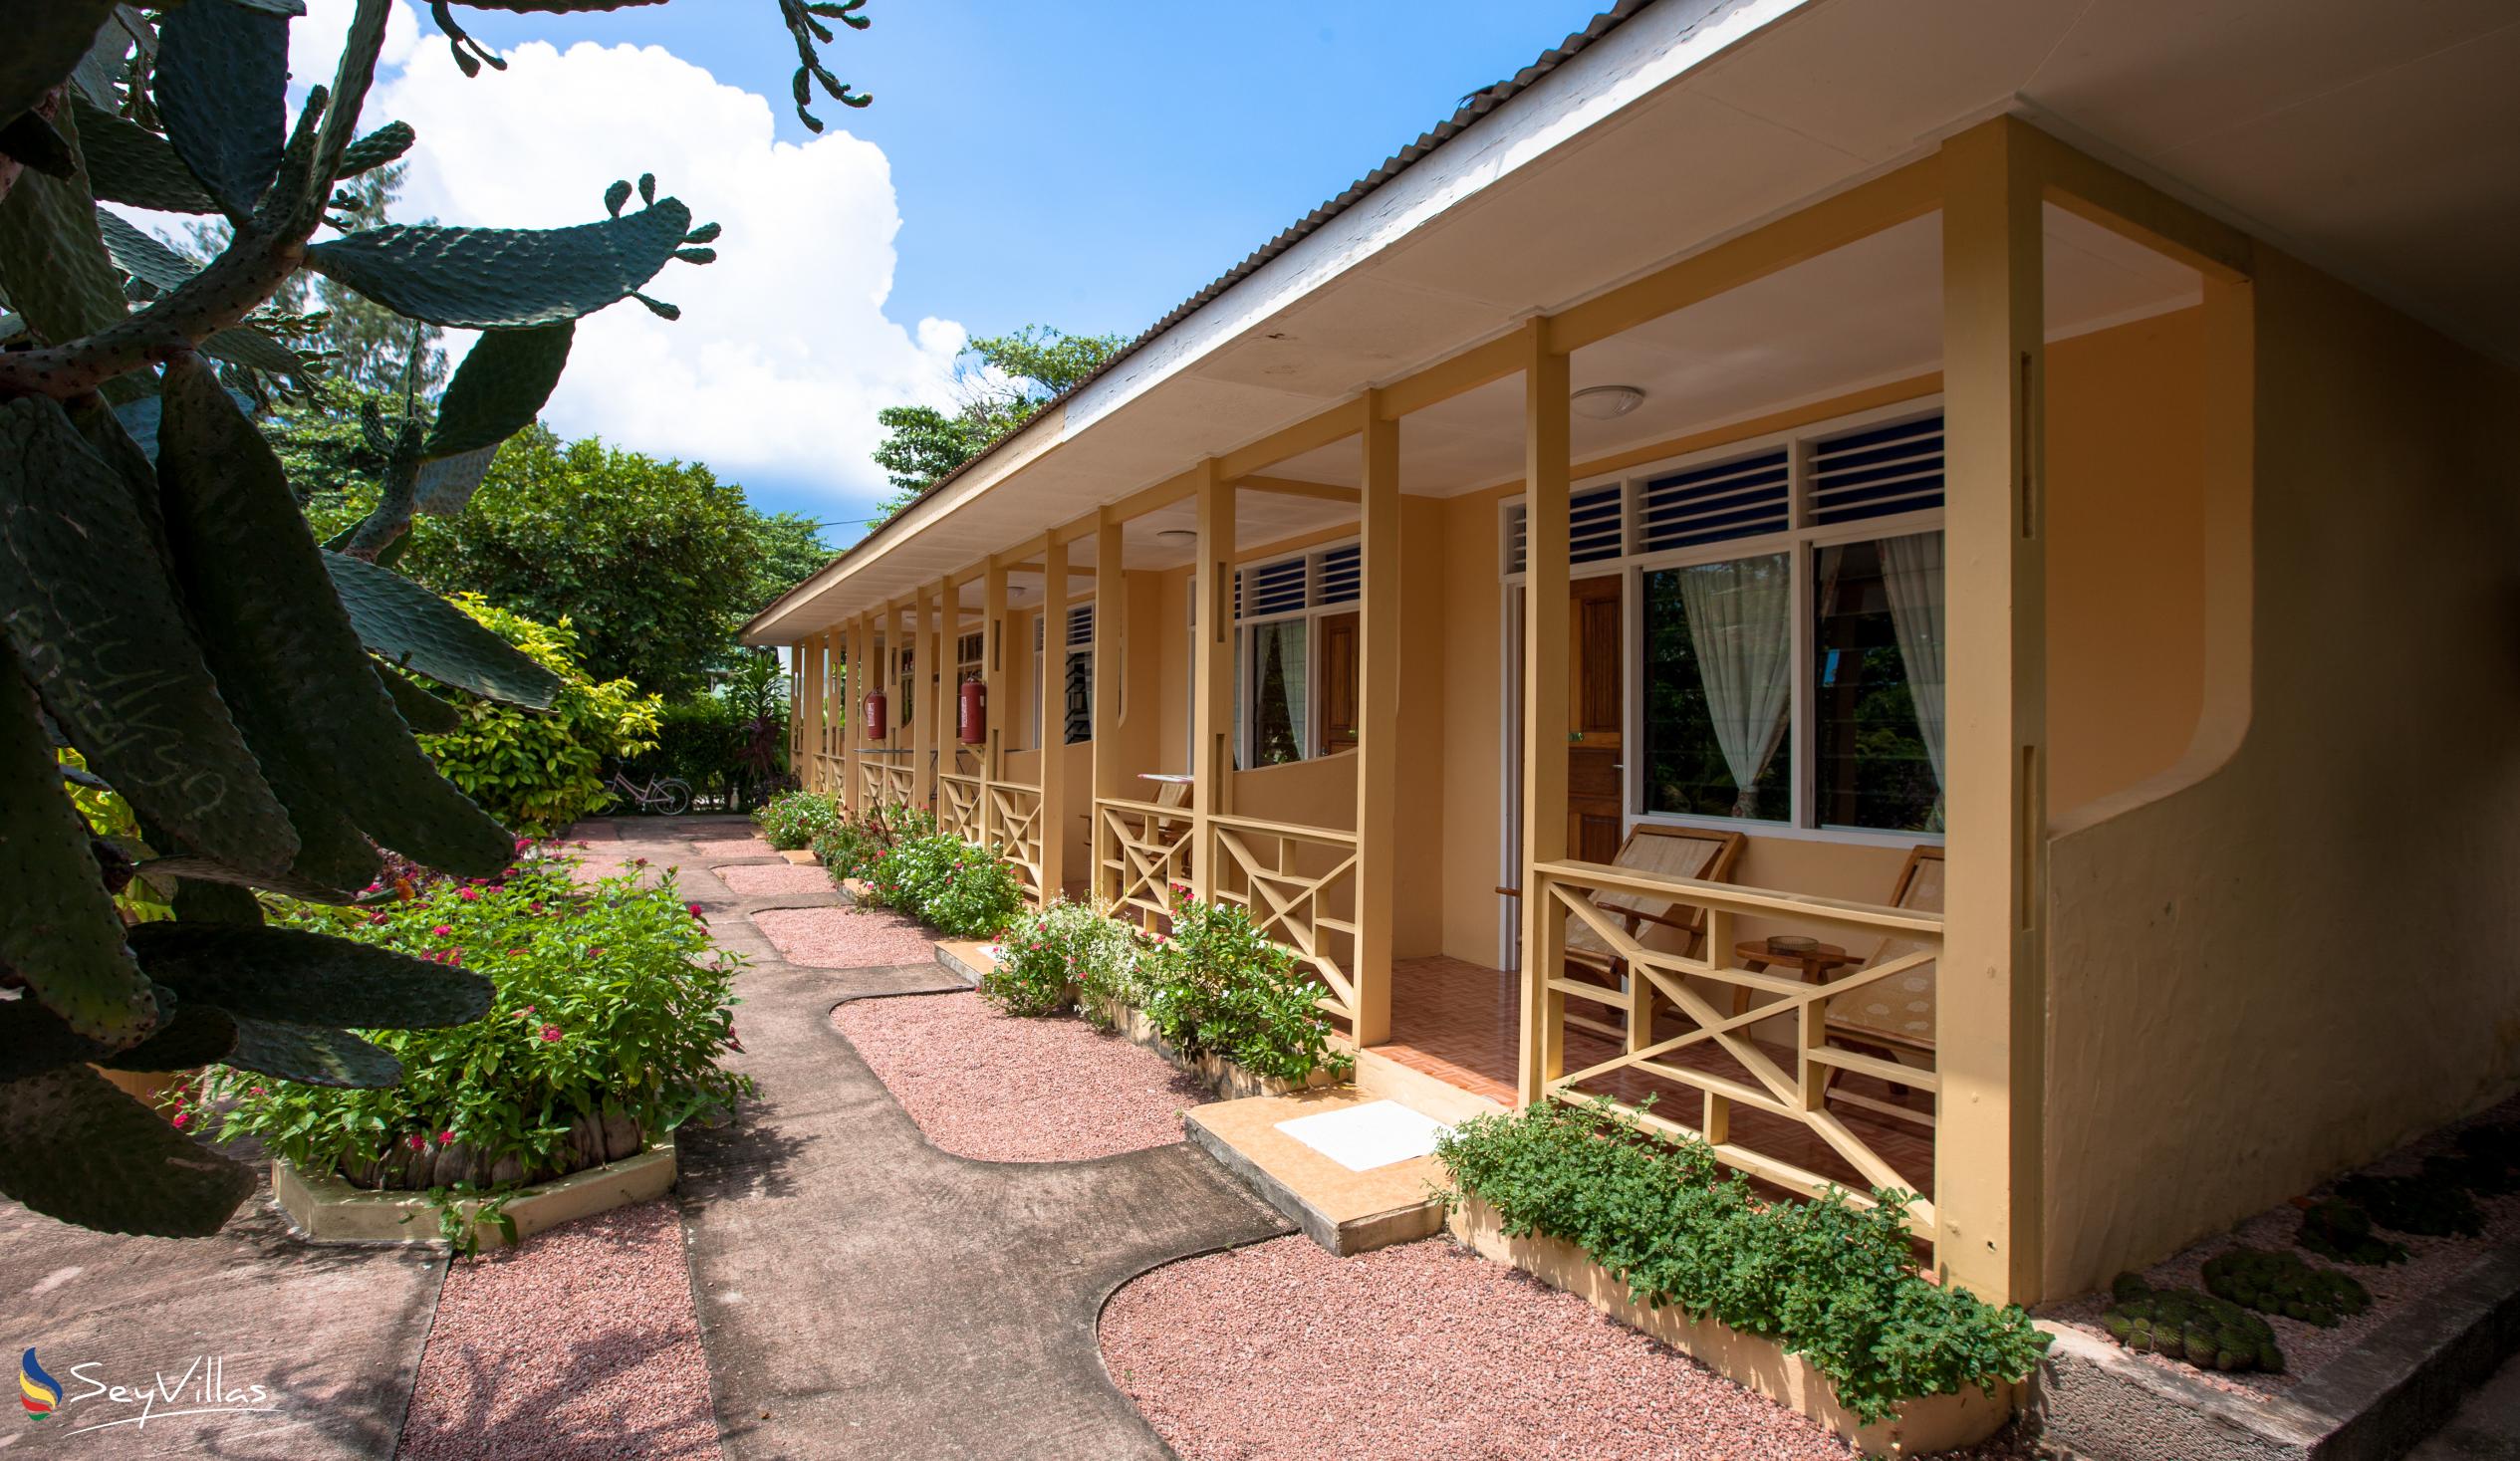 Photo 4: Chez Marston - Outdoor area - La Digue (Seychelles)